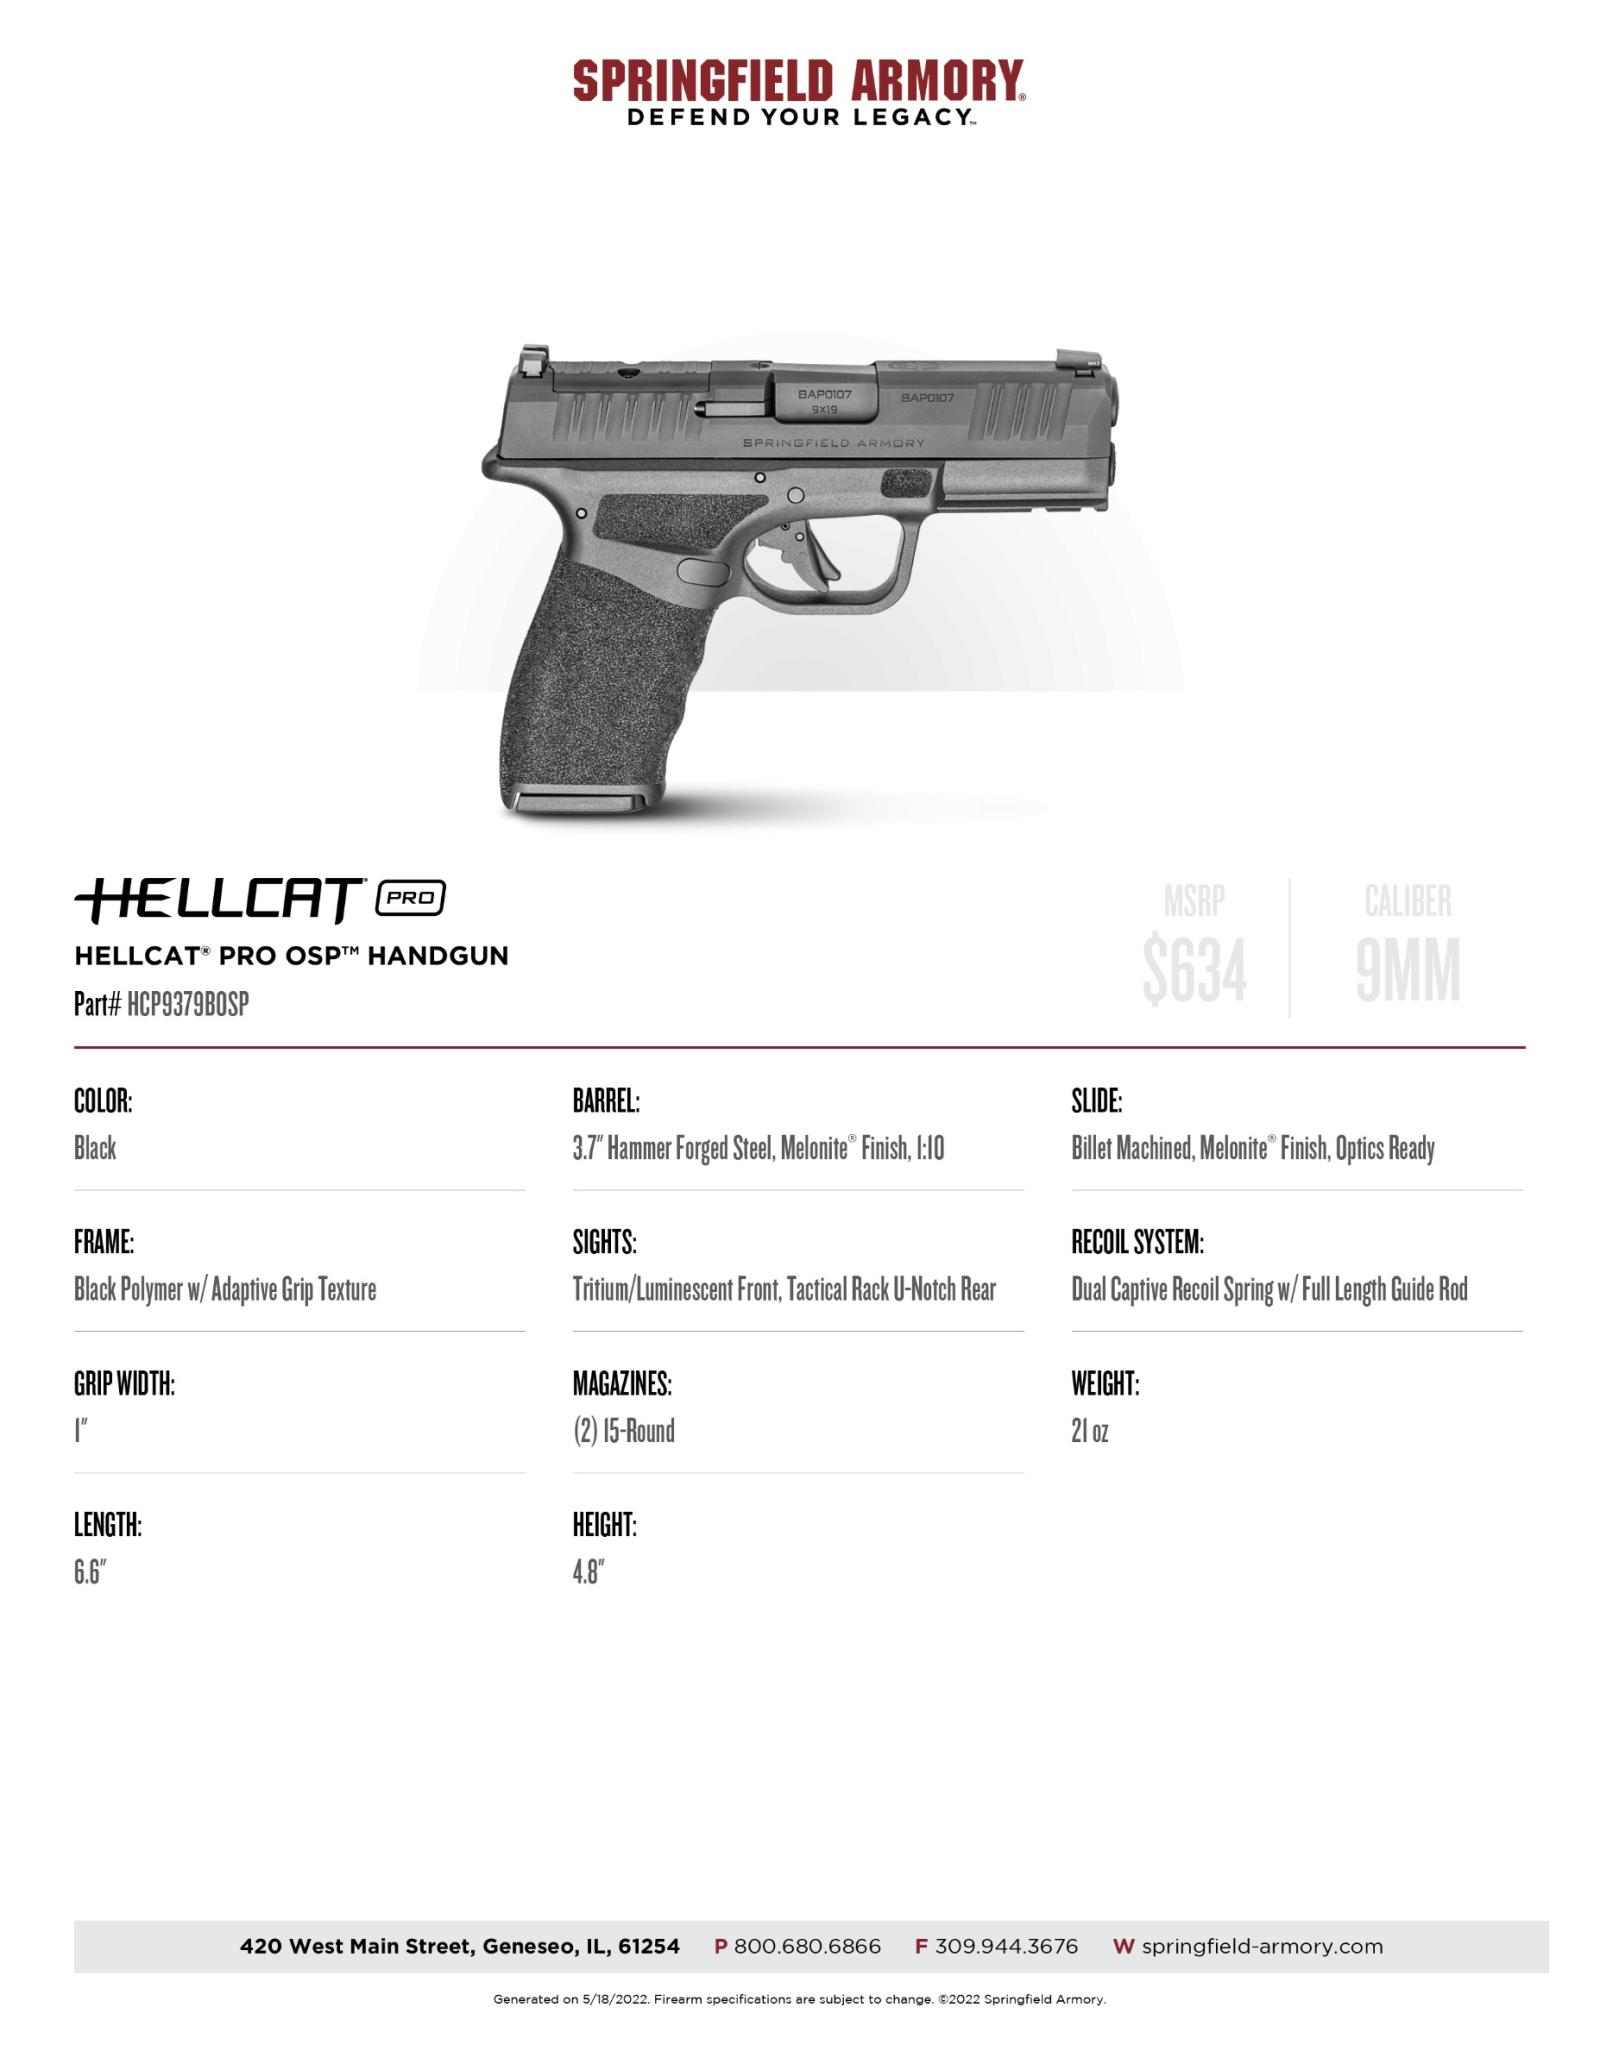 Springfield Armory Hellcat Pro OSP 9mm Handgun